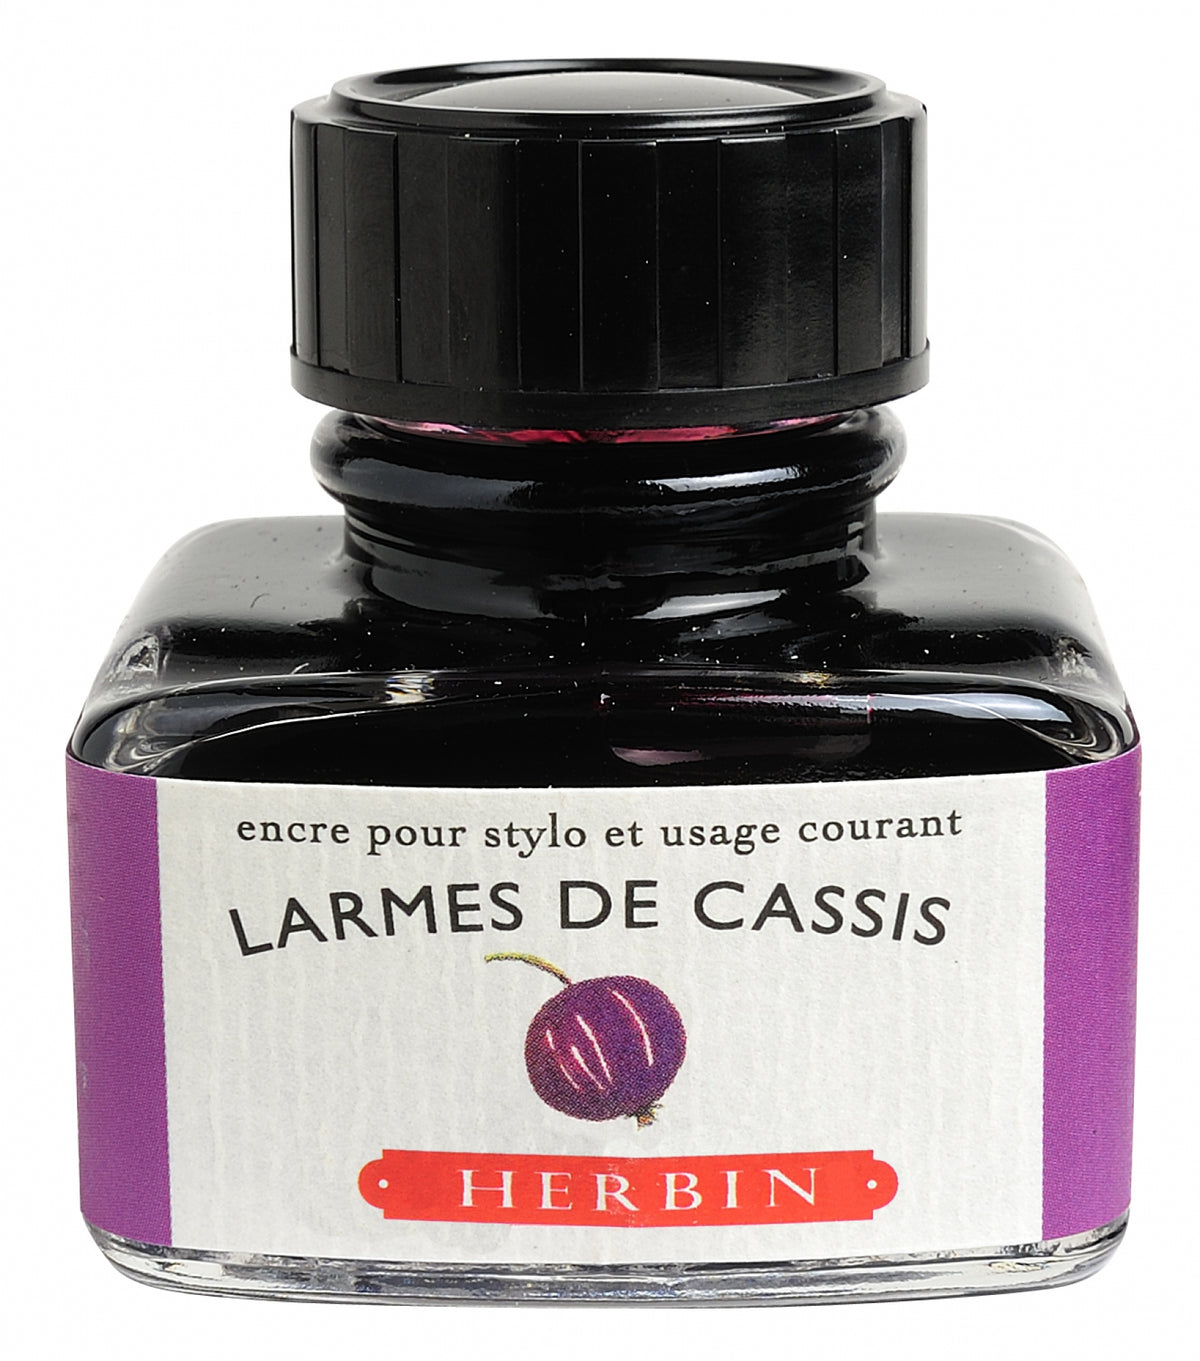 J Herbin Larmes de Cassis